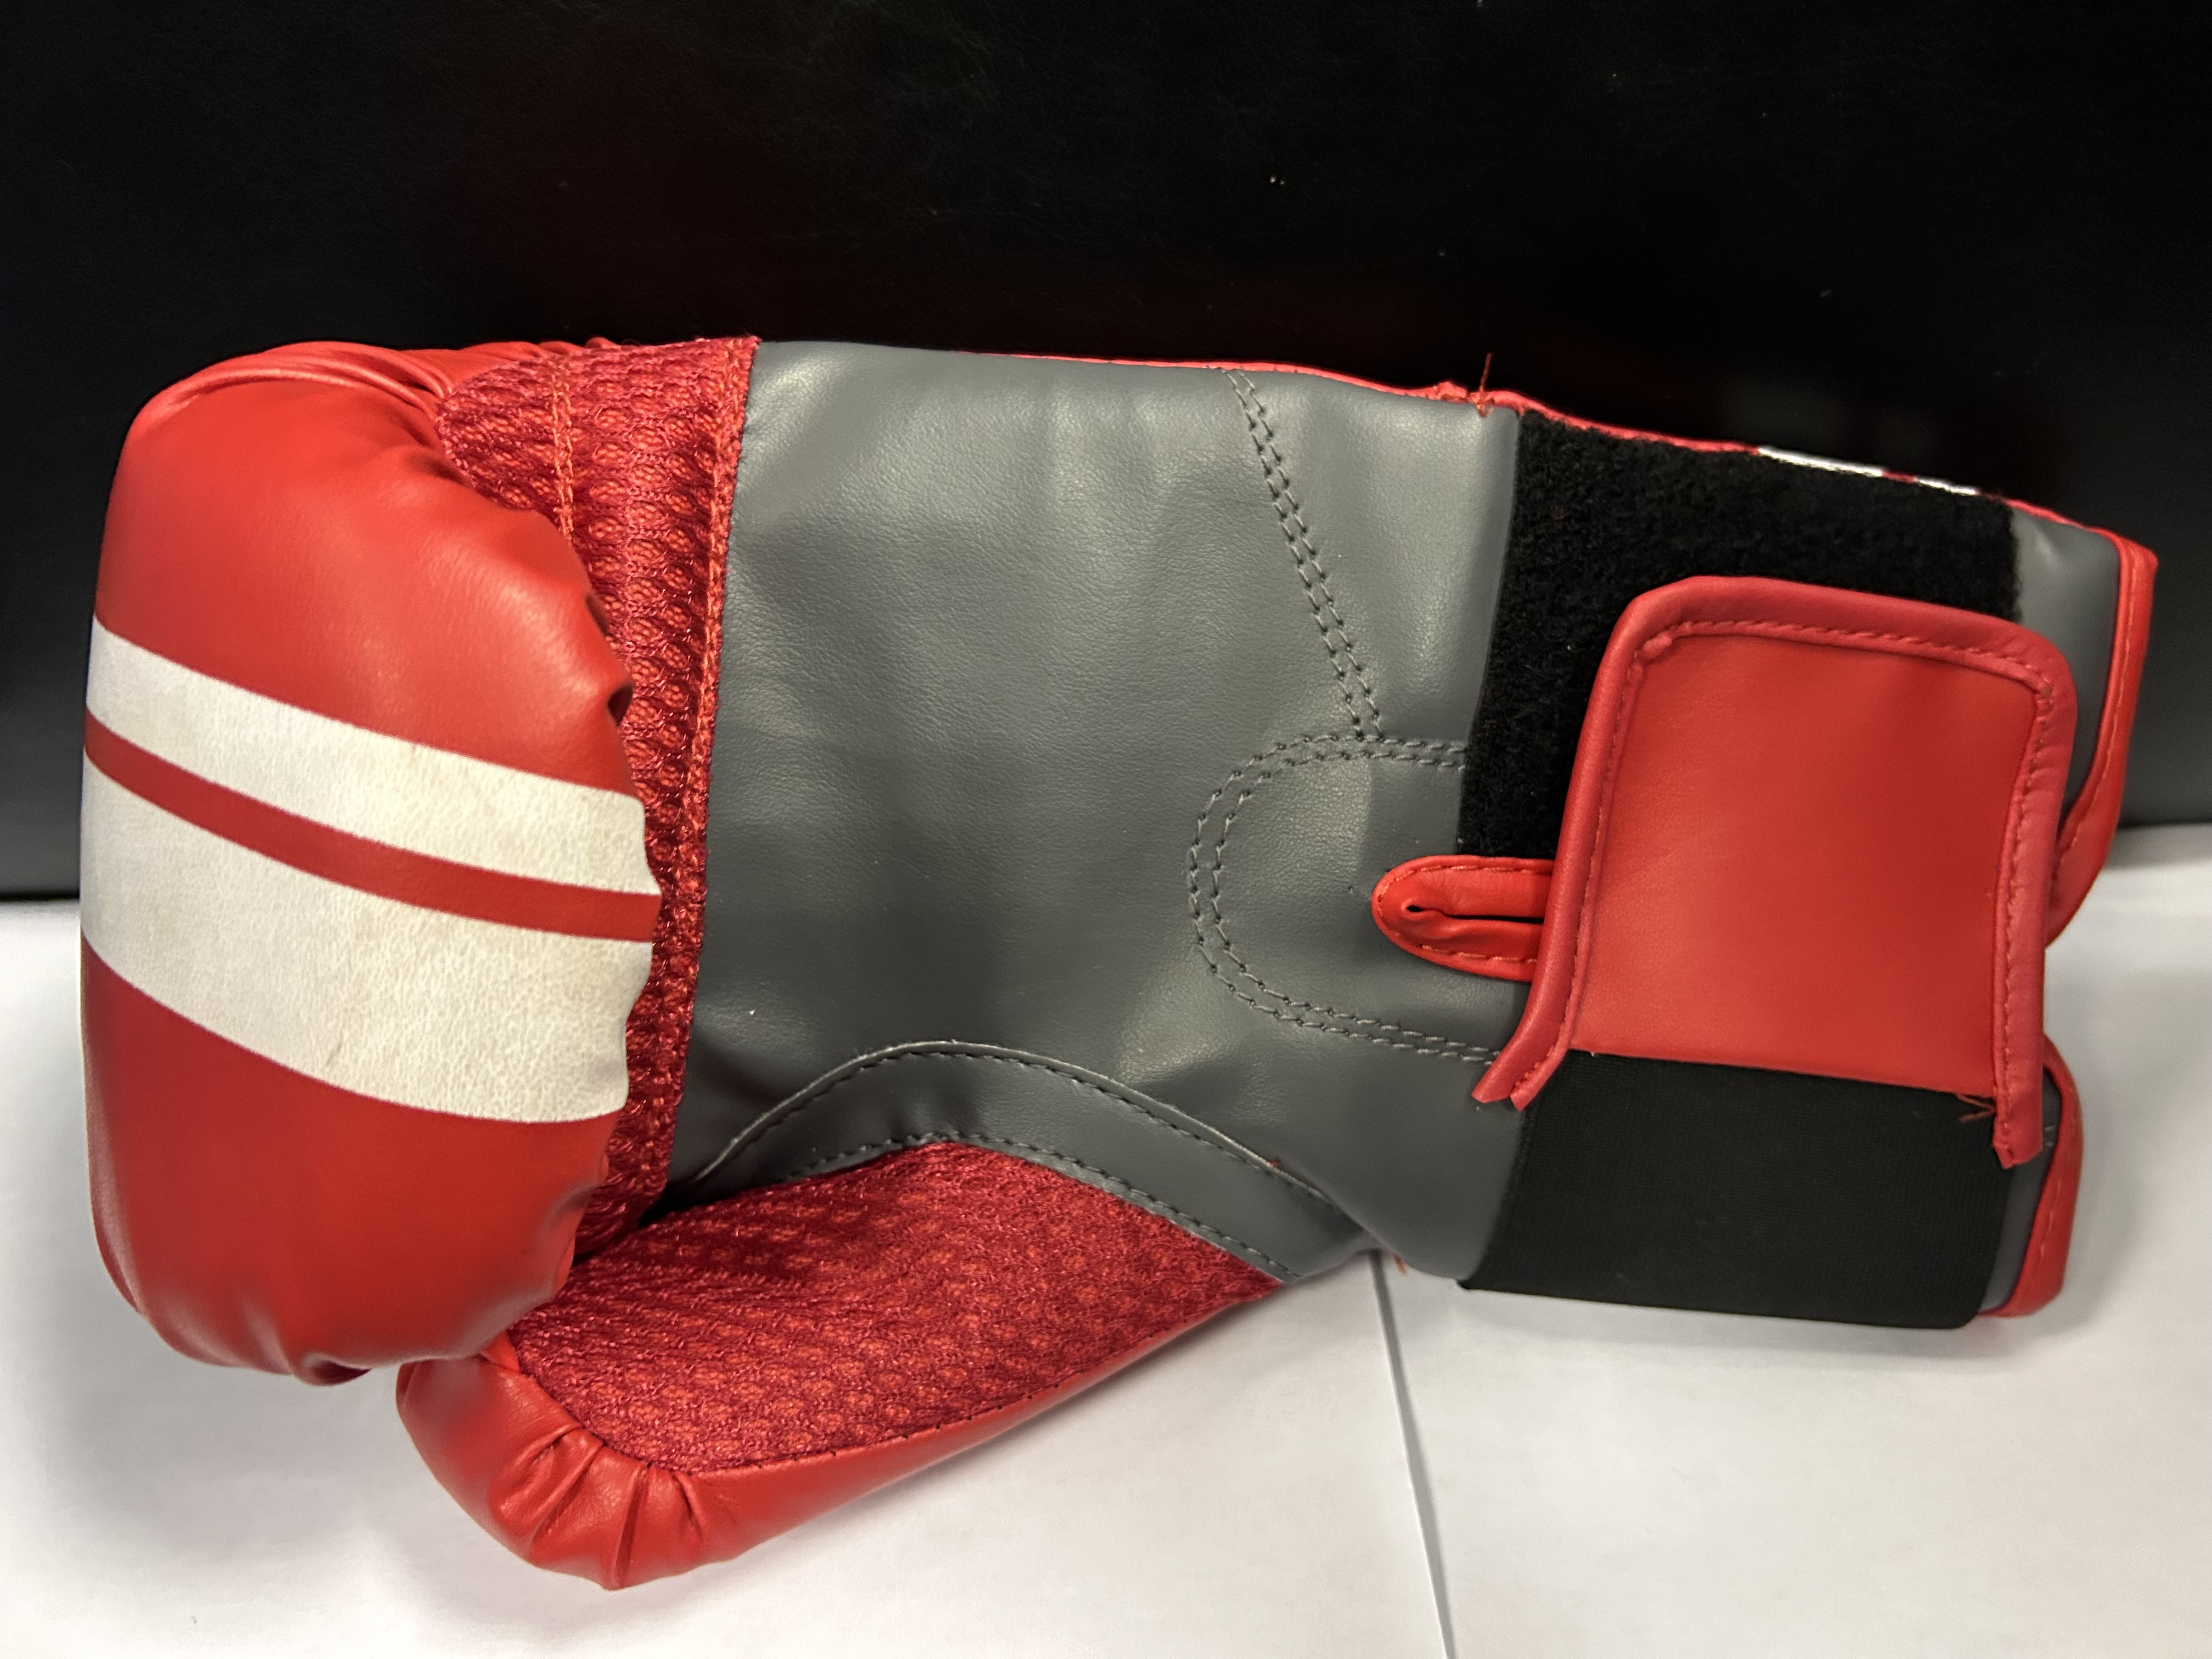 Tyson Fury Signed Boxing Glove - Image 2 of 3